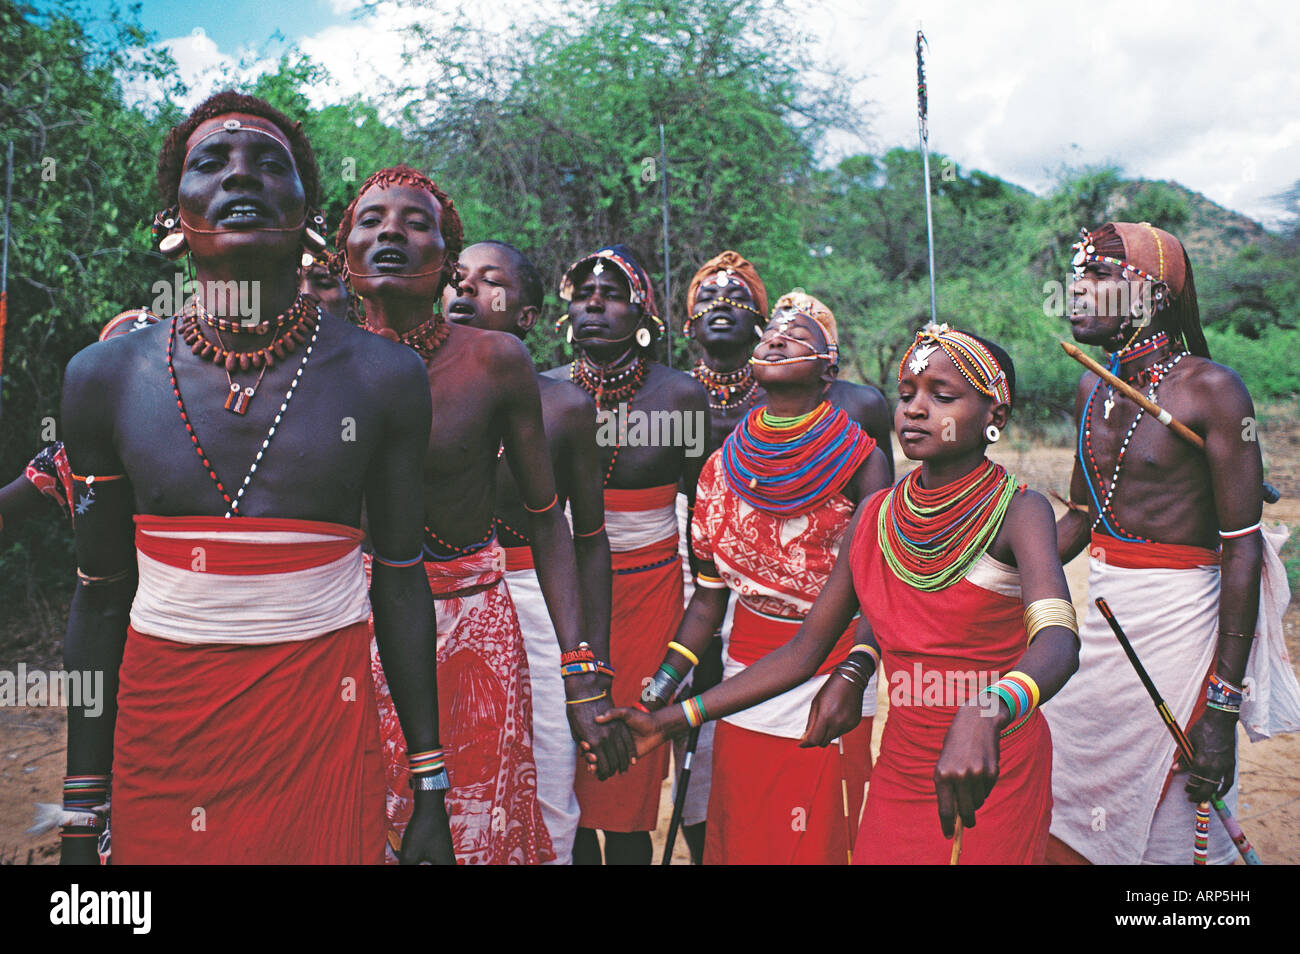 Samburu moran or warriors and girls dancing in traditional dress Samburu National Reserve Kenya East Africa Stock Photo